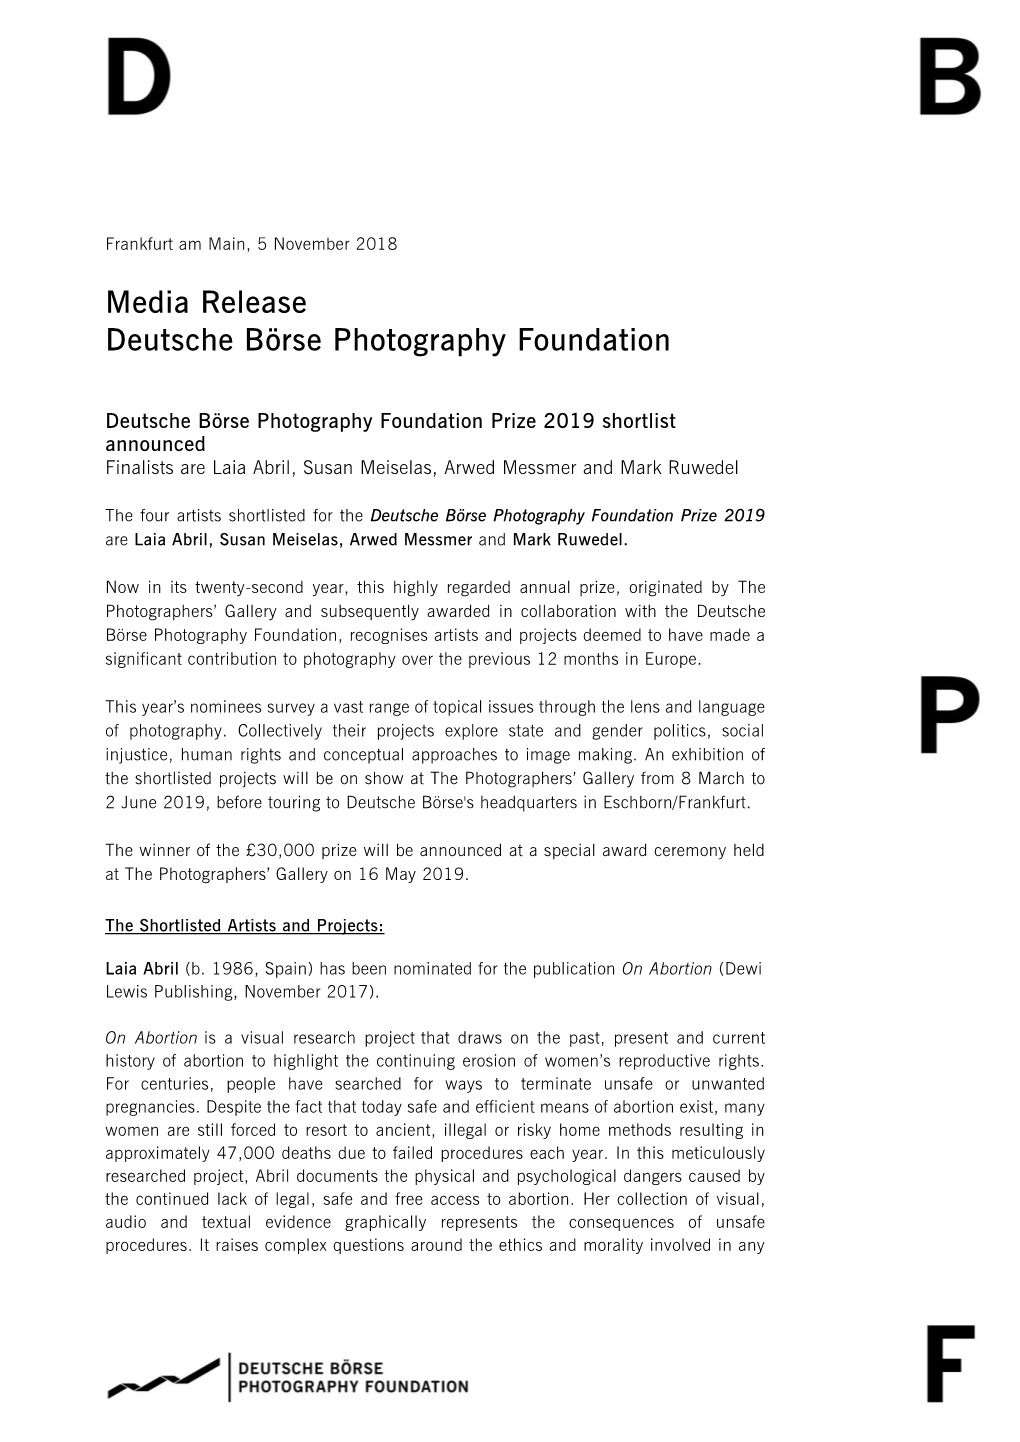 Media Release Deutsche Börse Photography Foundation